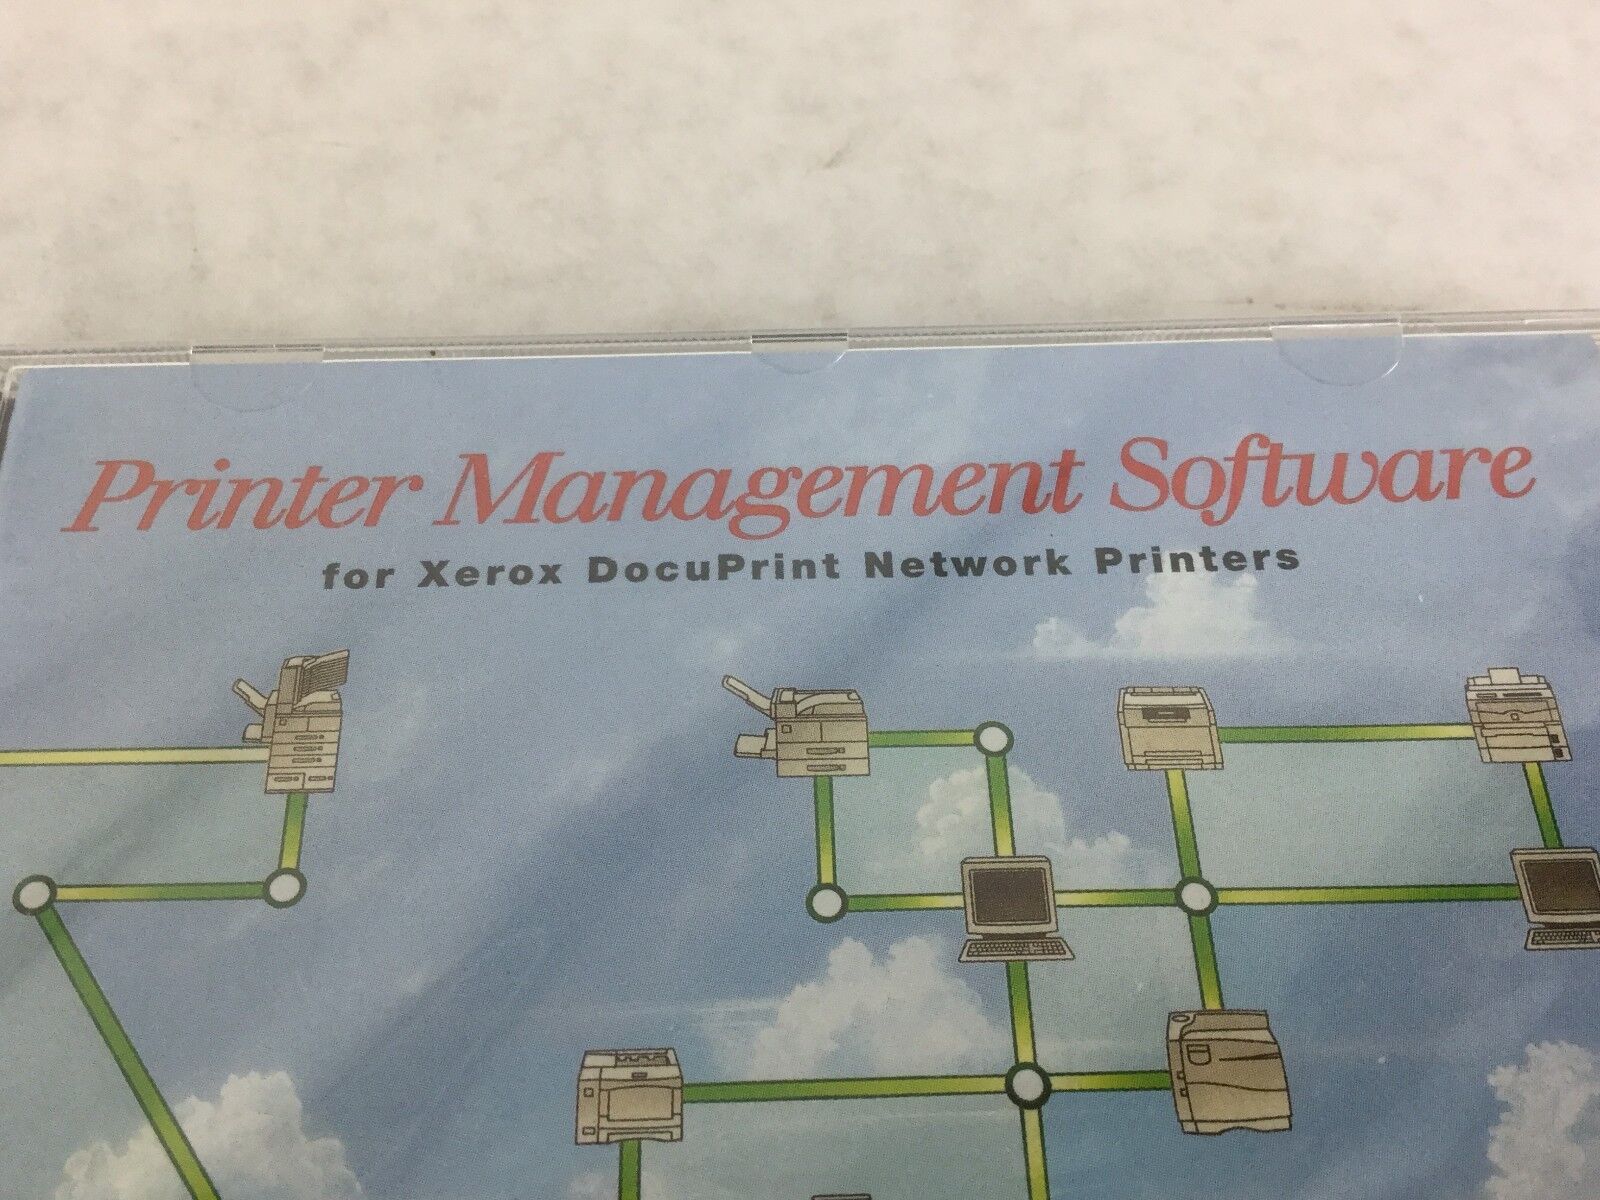 Printer Management Software CD for Xerox DocuPrint Network Printers 300K82320